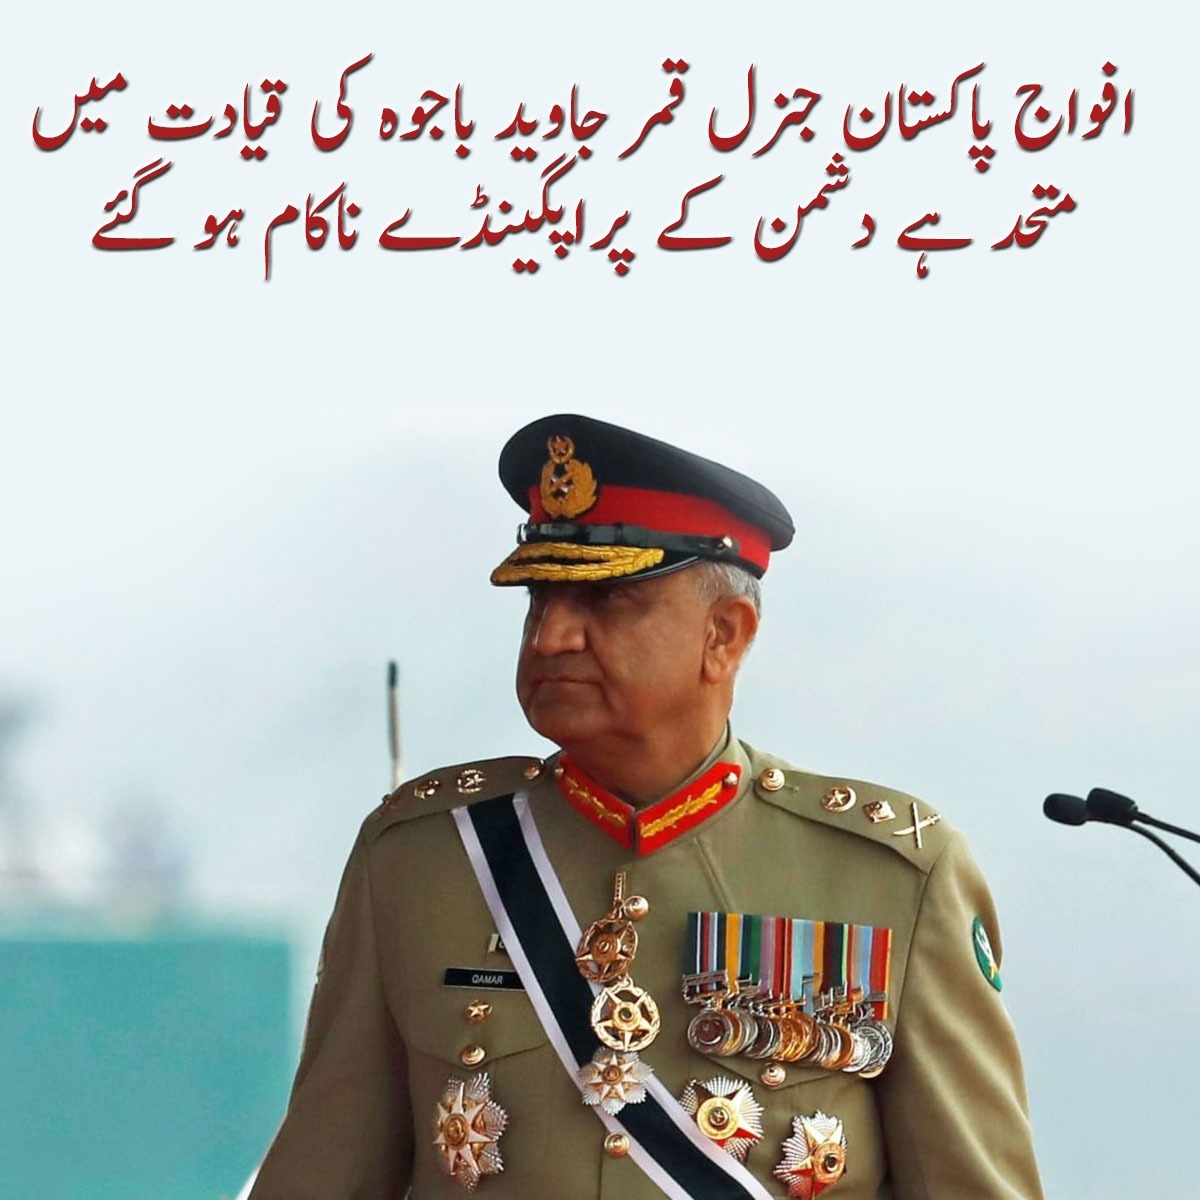 Has expressed full confidence in the leadership of Army Chief General Qamar Javed Bajwa for rejecting the agenda of Pakistan's enemies.
#GenBajwaWillStay
#BehindYouBajwa